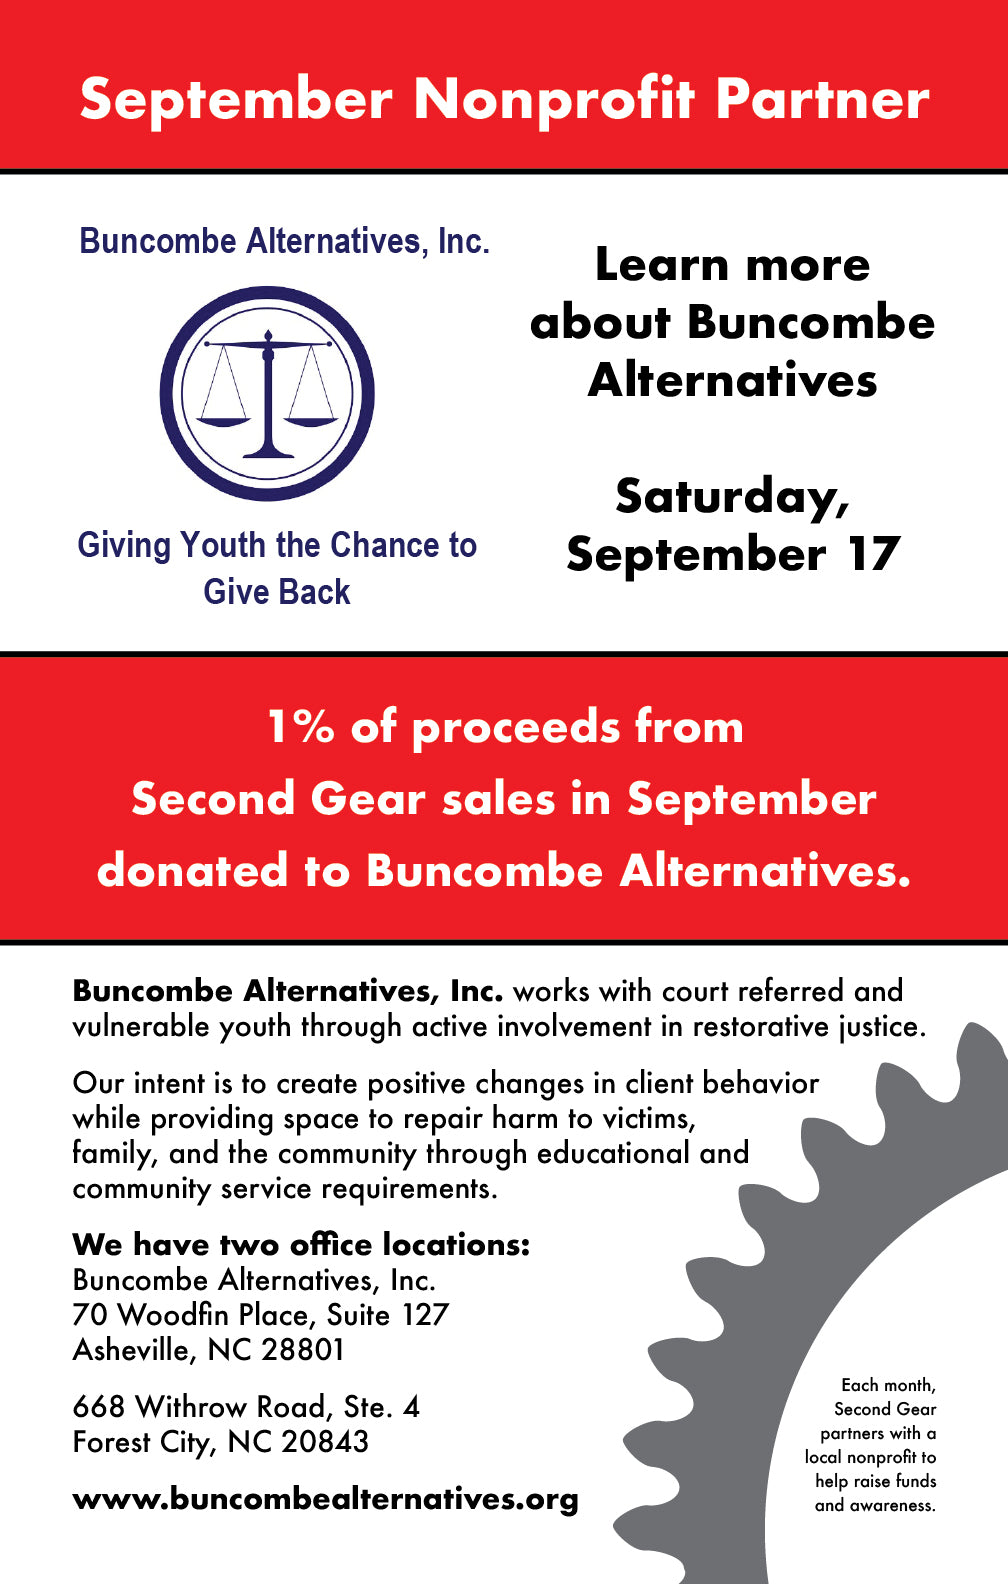 Second Gear's September Non-profit: Buncombe Alternatives Inc.